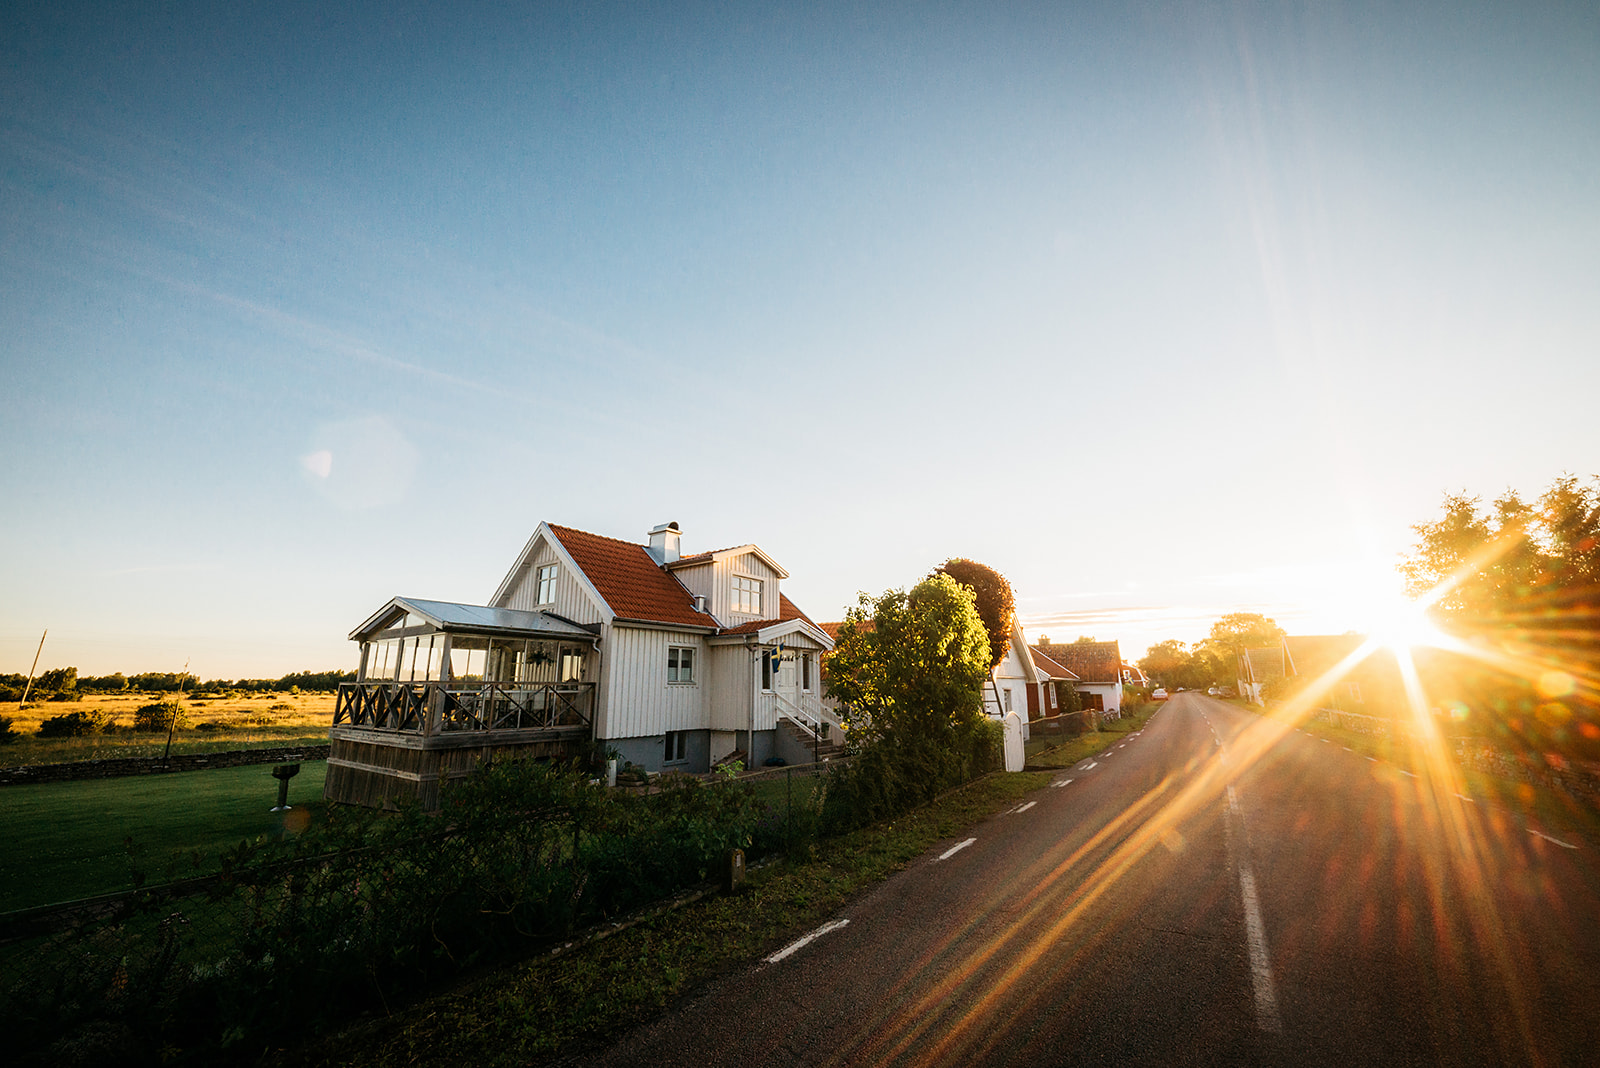 sunrise over a small settlement in rural Sweden